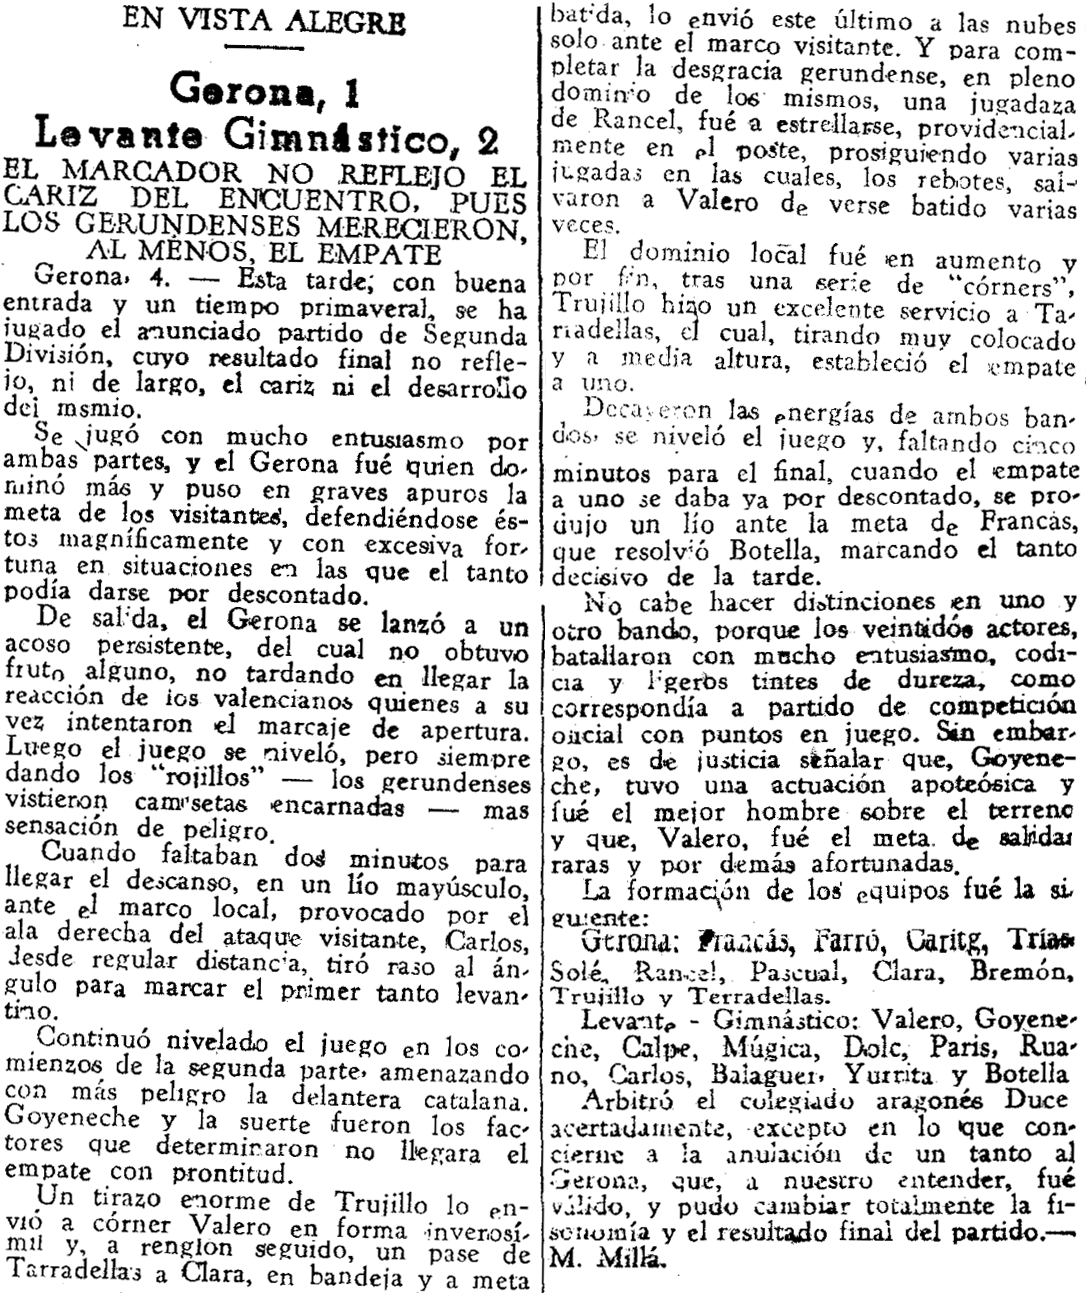 1940.02.04 (4 февраля 1940), Жирона - Леванте, 1-2.png